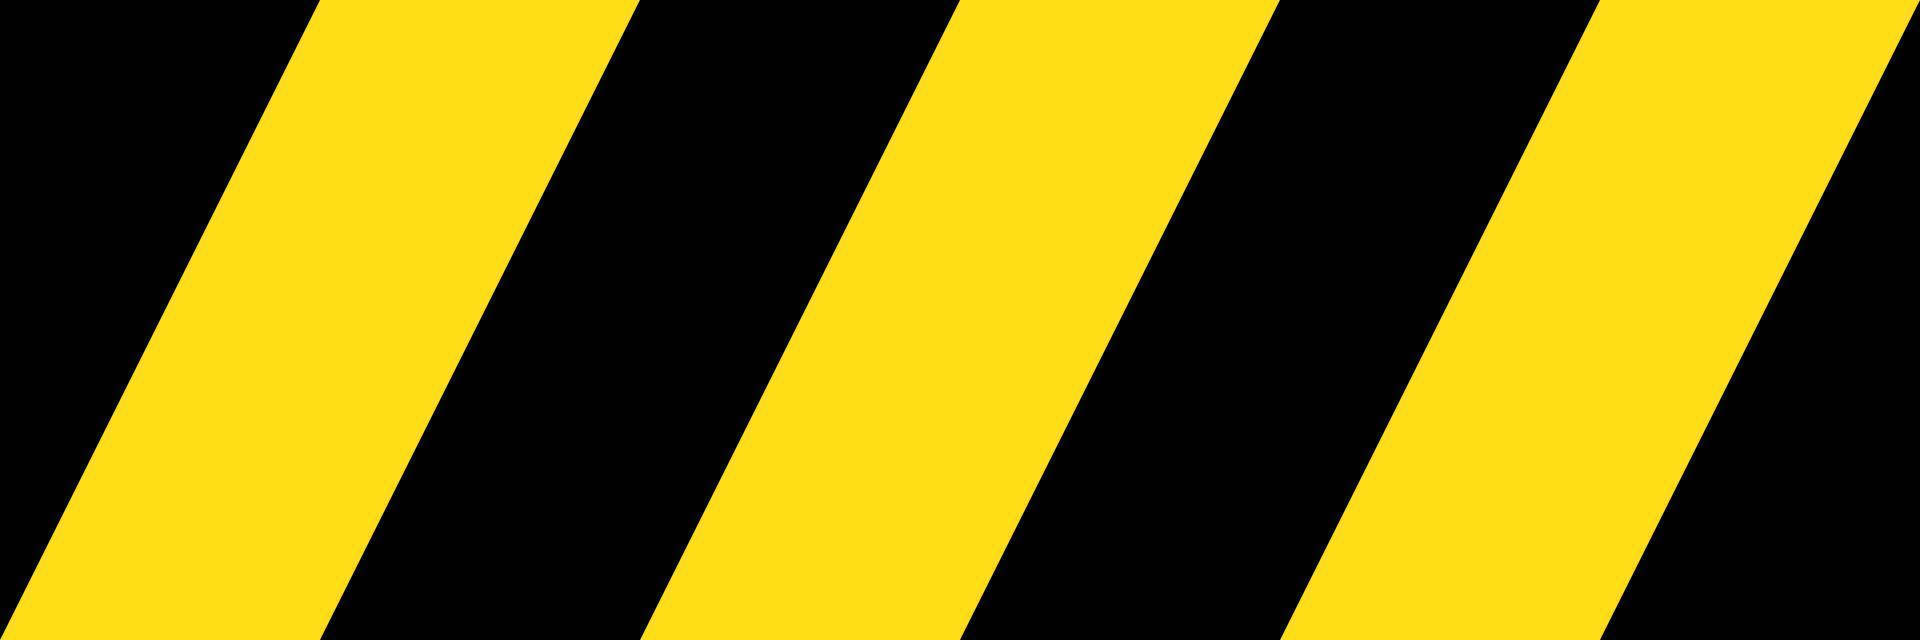 cinta de precaución amarilla y negra, cinta de barricada patrón o textura a rayas sin costuras. vector